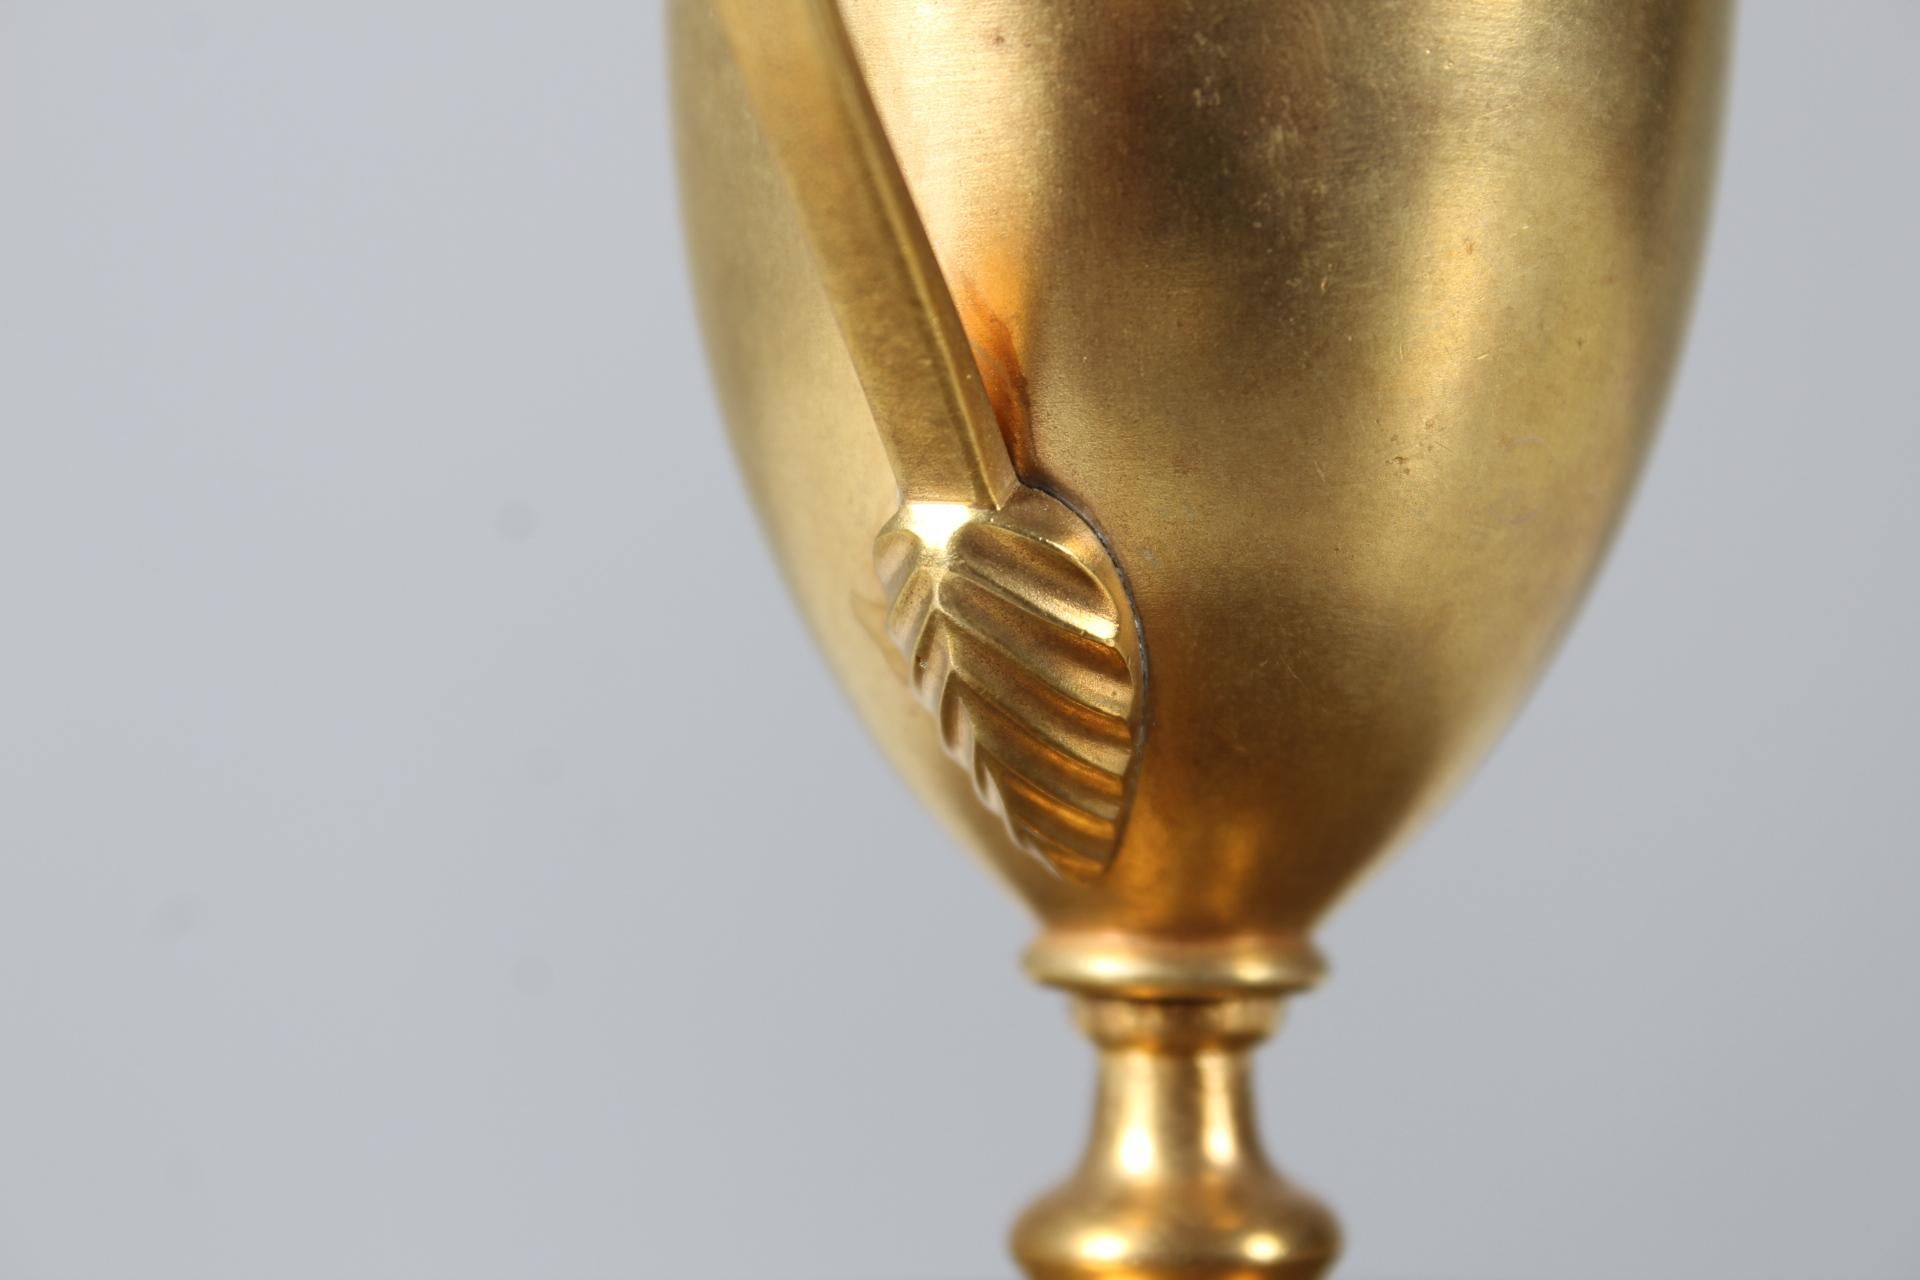 Antique Inkwell, Gilded Bronze, Antique Desk Utensil, Vase-Shaped For Sale 1